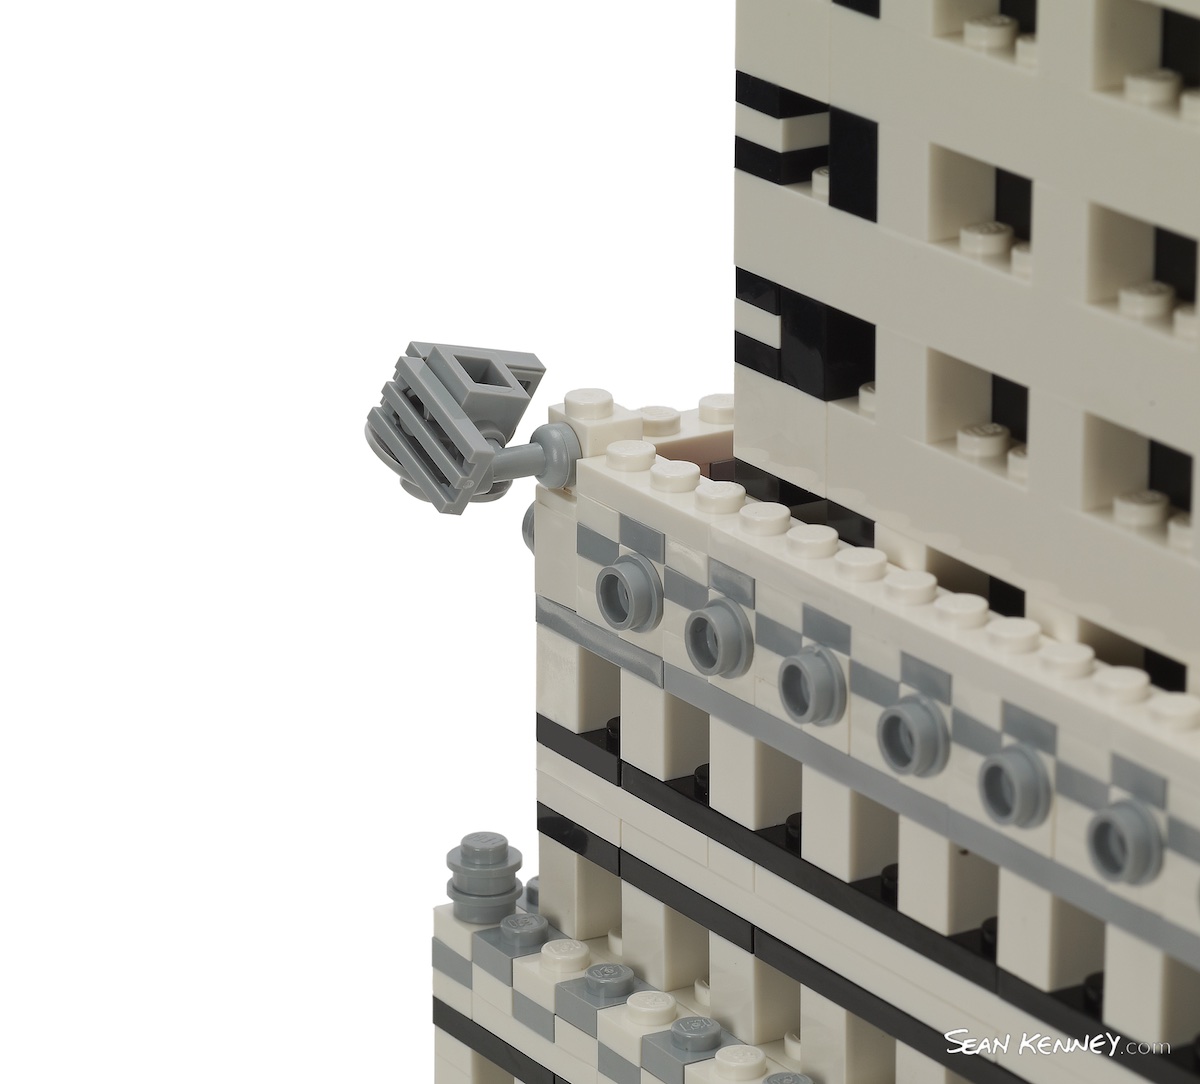 Famous LEGO builder - Chrysler Building